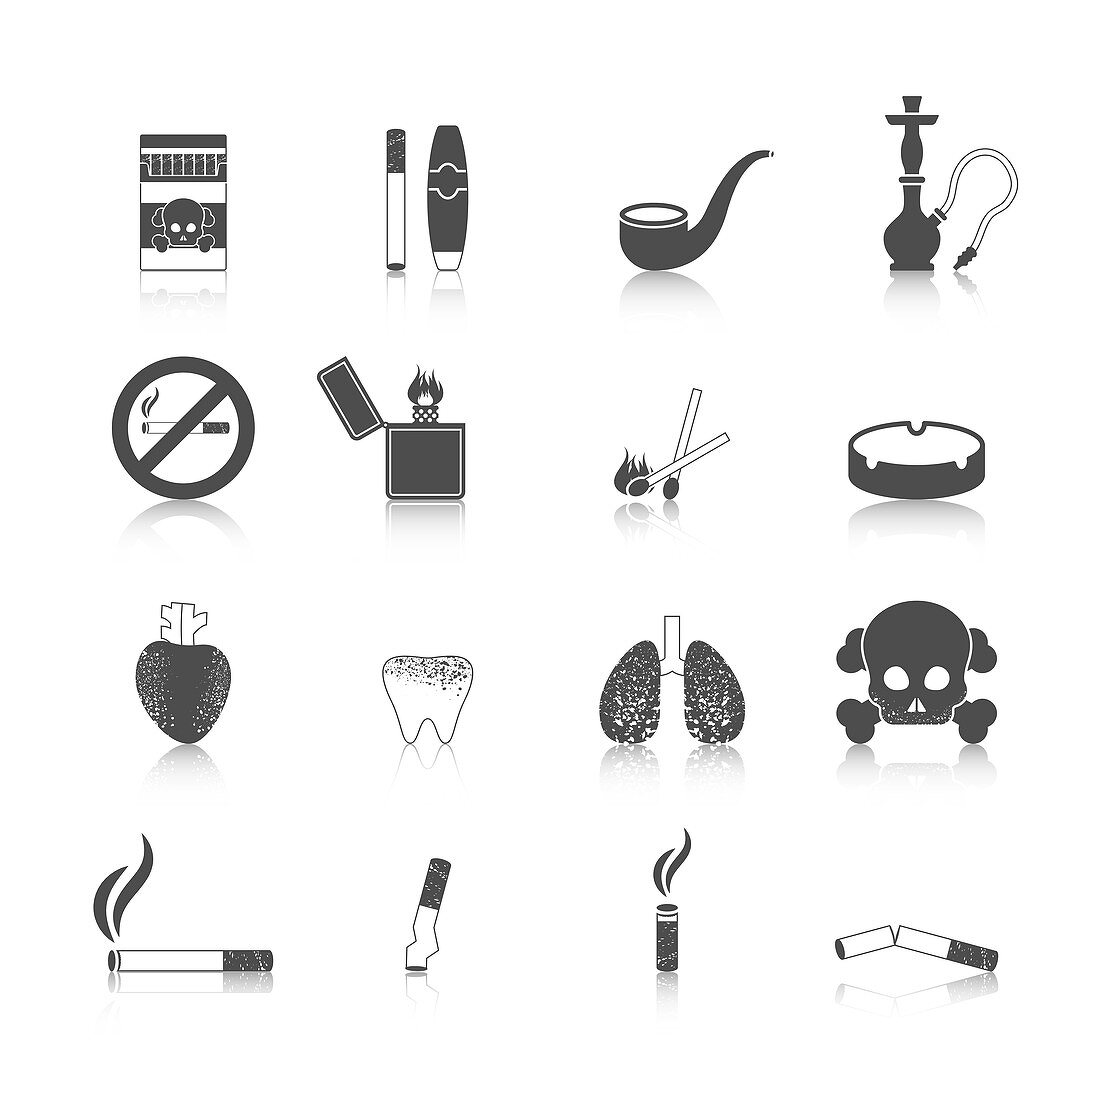 Smoking icons, illustration